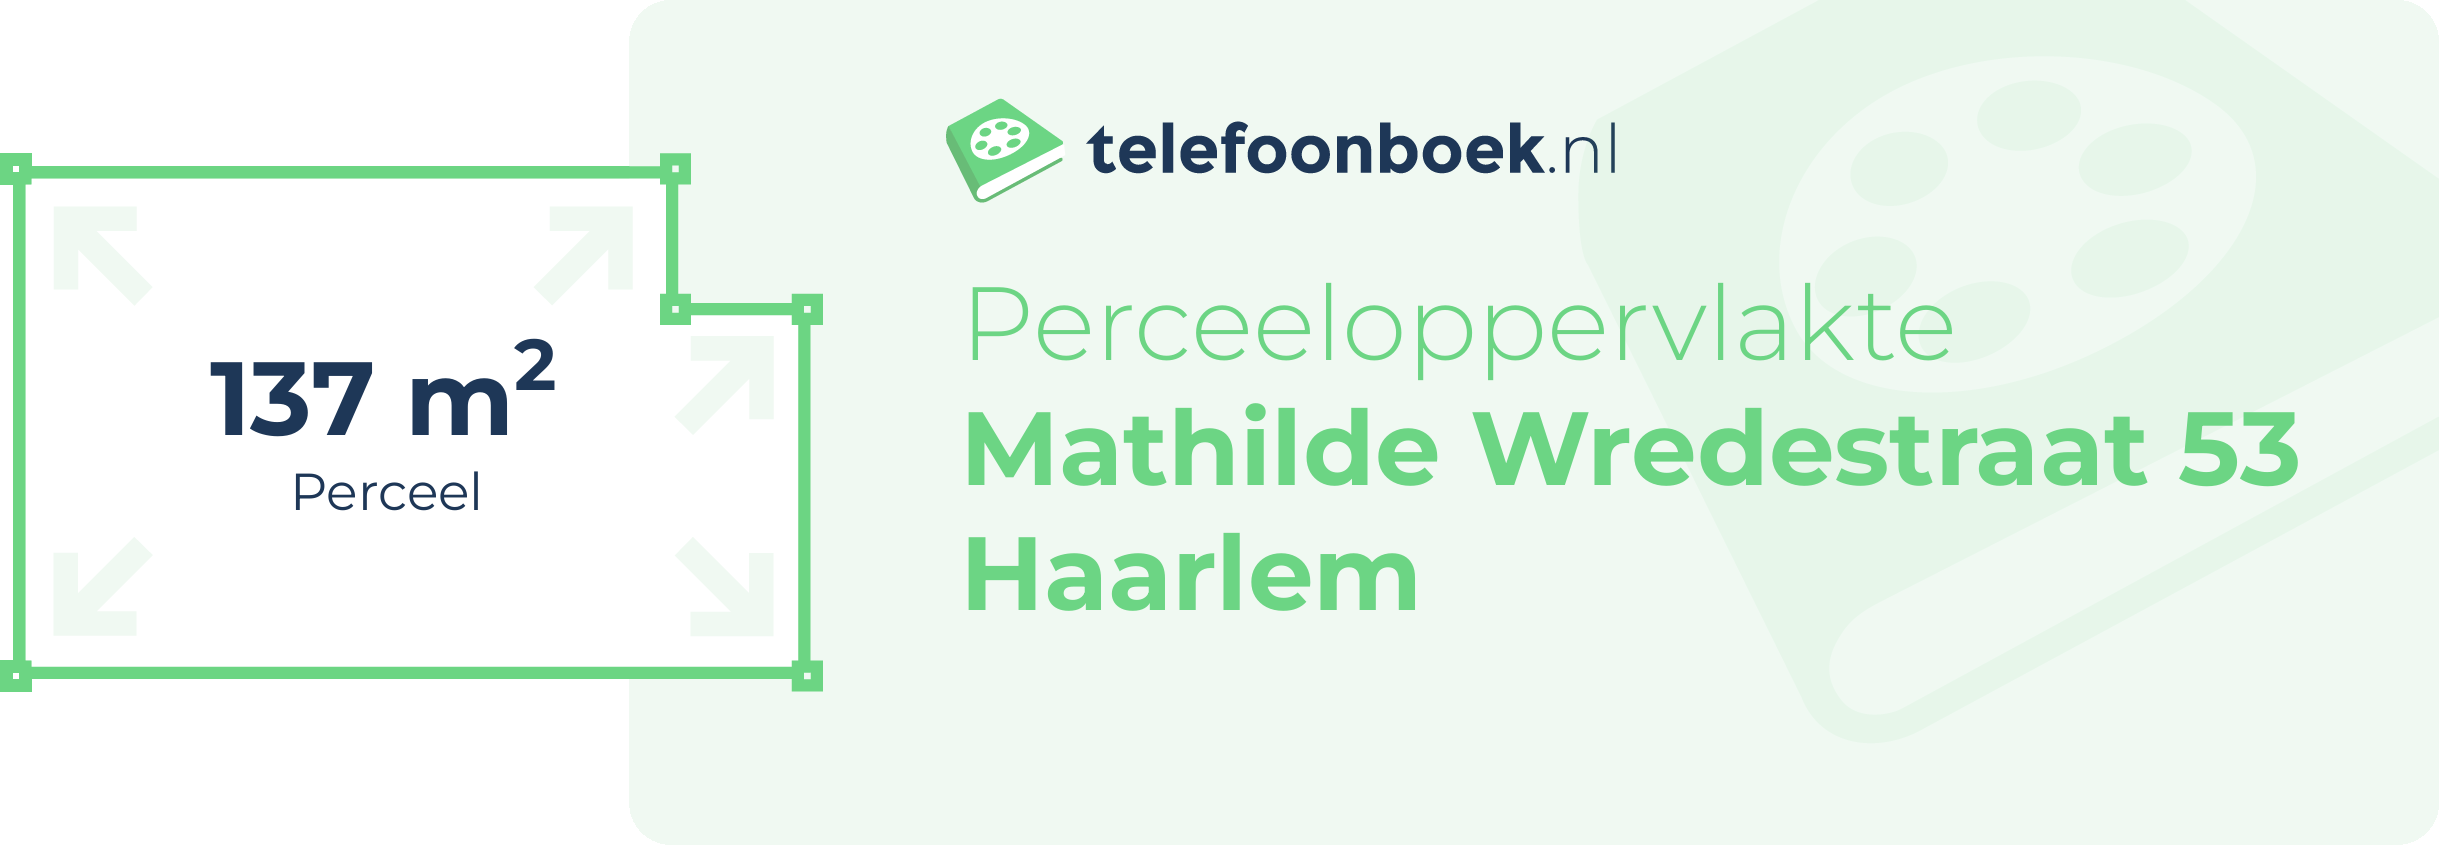 Perceeloppervlakte Mathilde Wredestraat 53 Haarlem